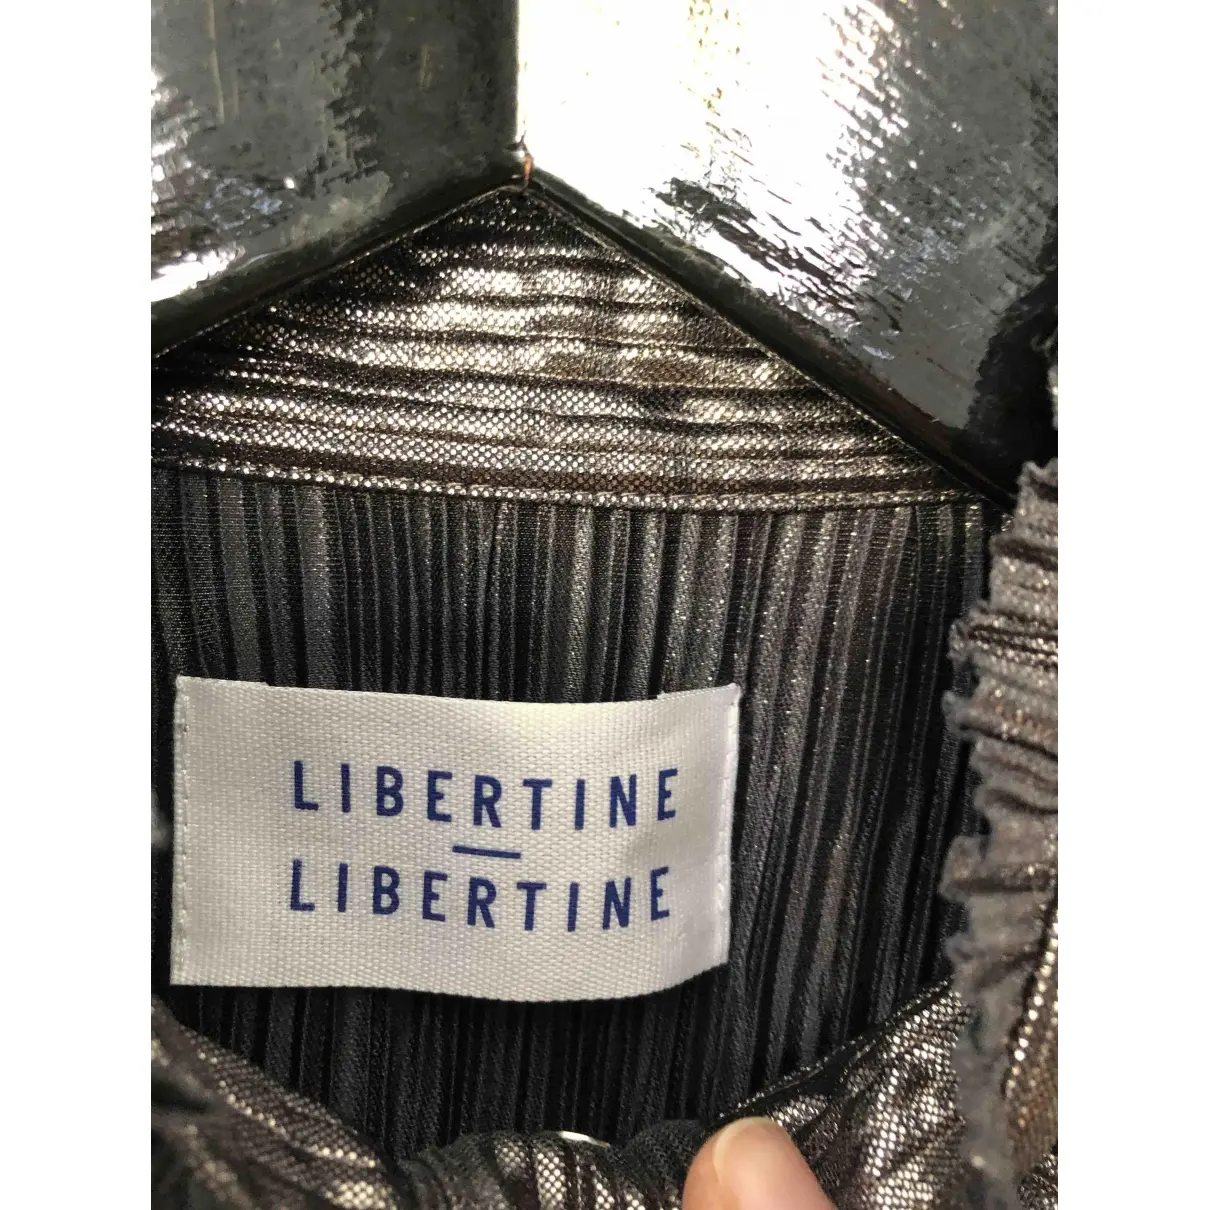 Libertine Libertine Mini dress for sale